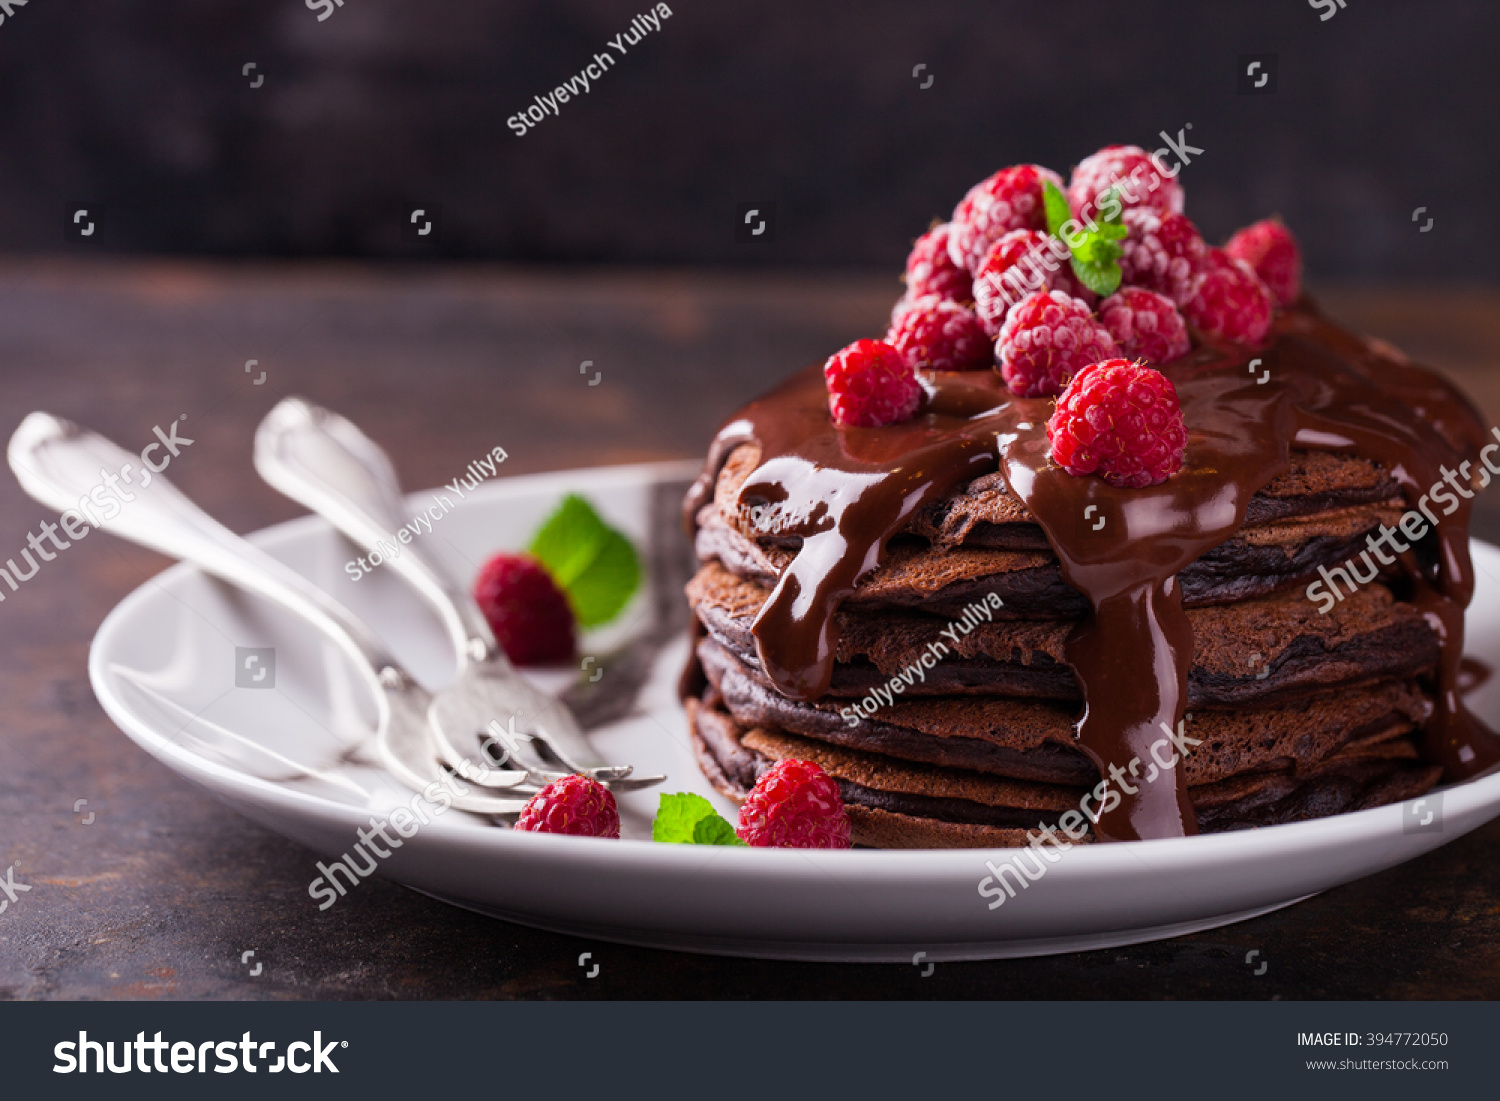 Chocolate pancake with chocolate glaze,raspberries and mint.selective focus #394772050